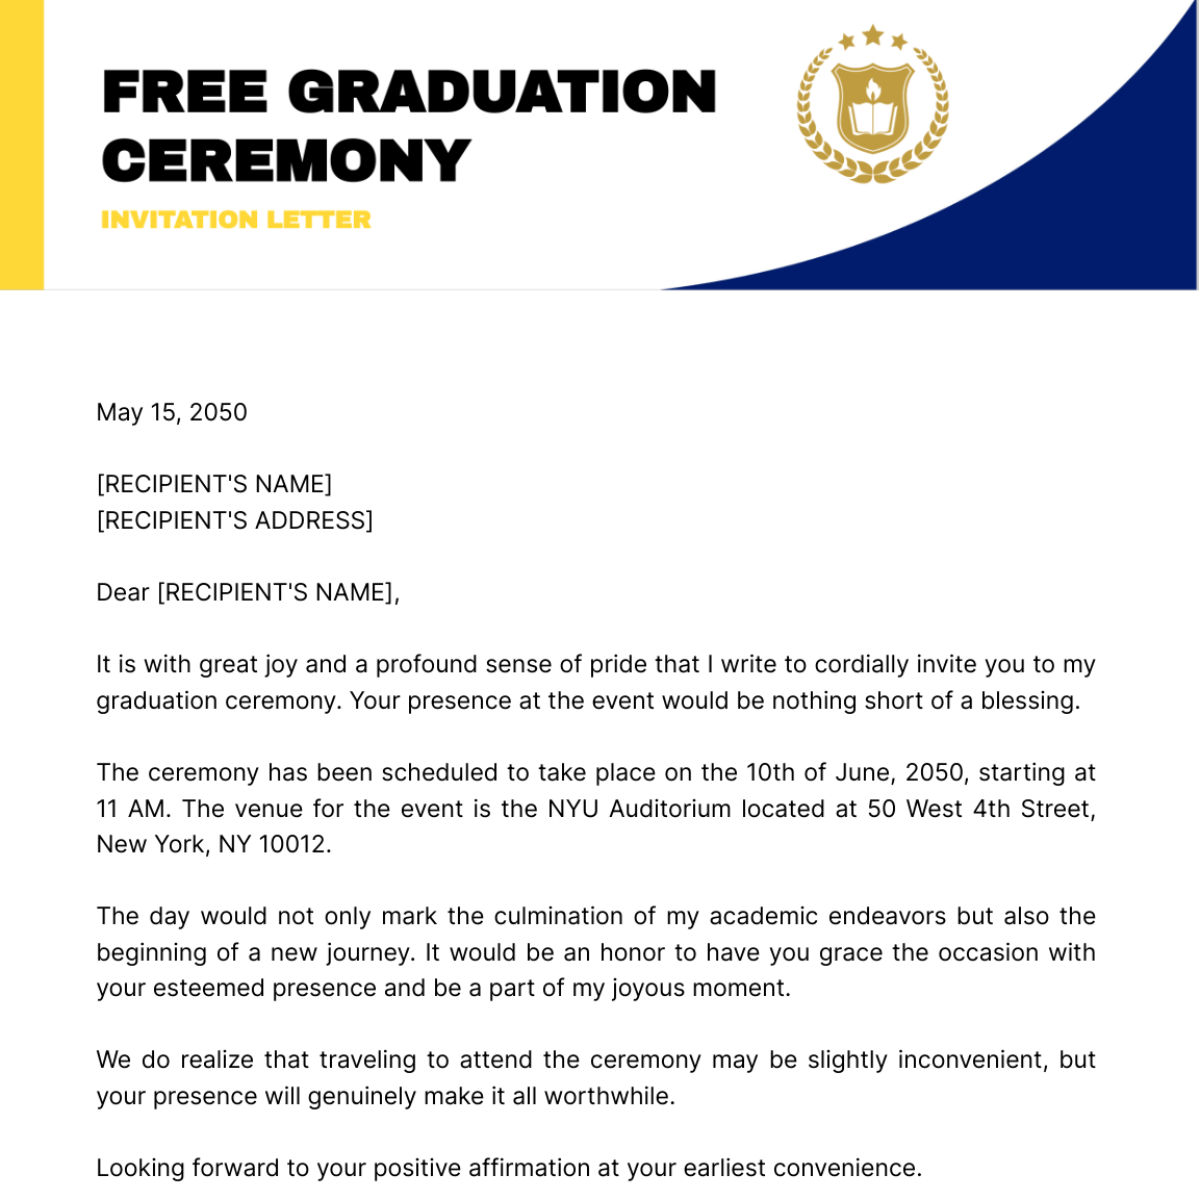 Graduation Ceremony Invitation Letter Template